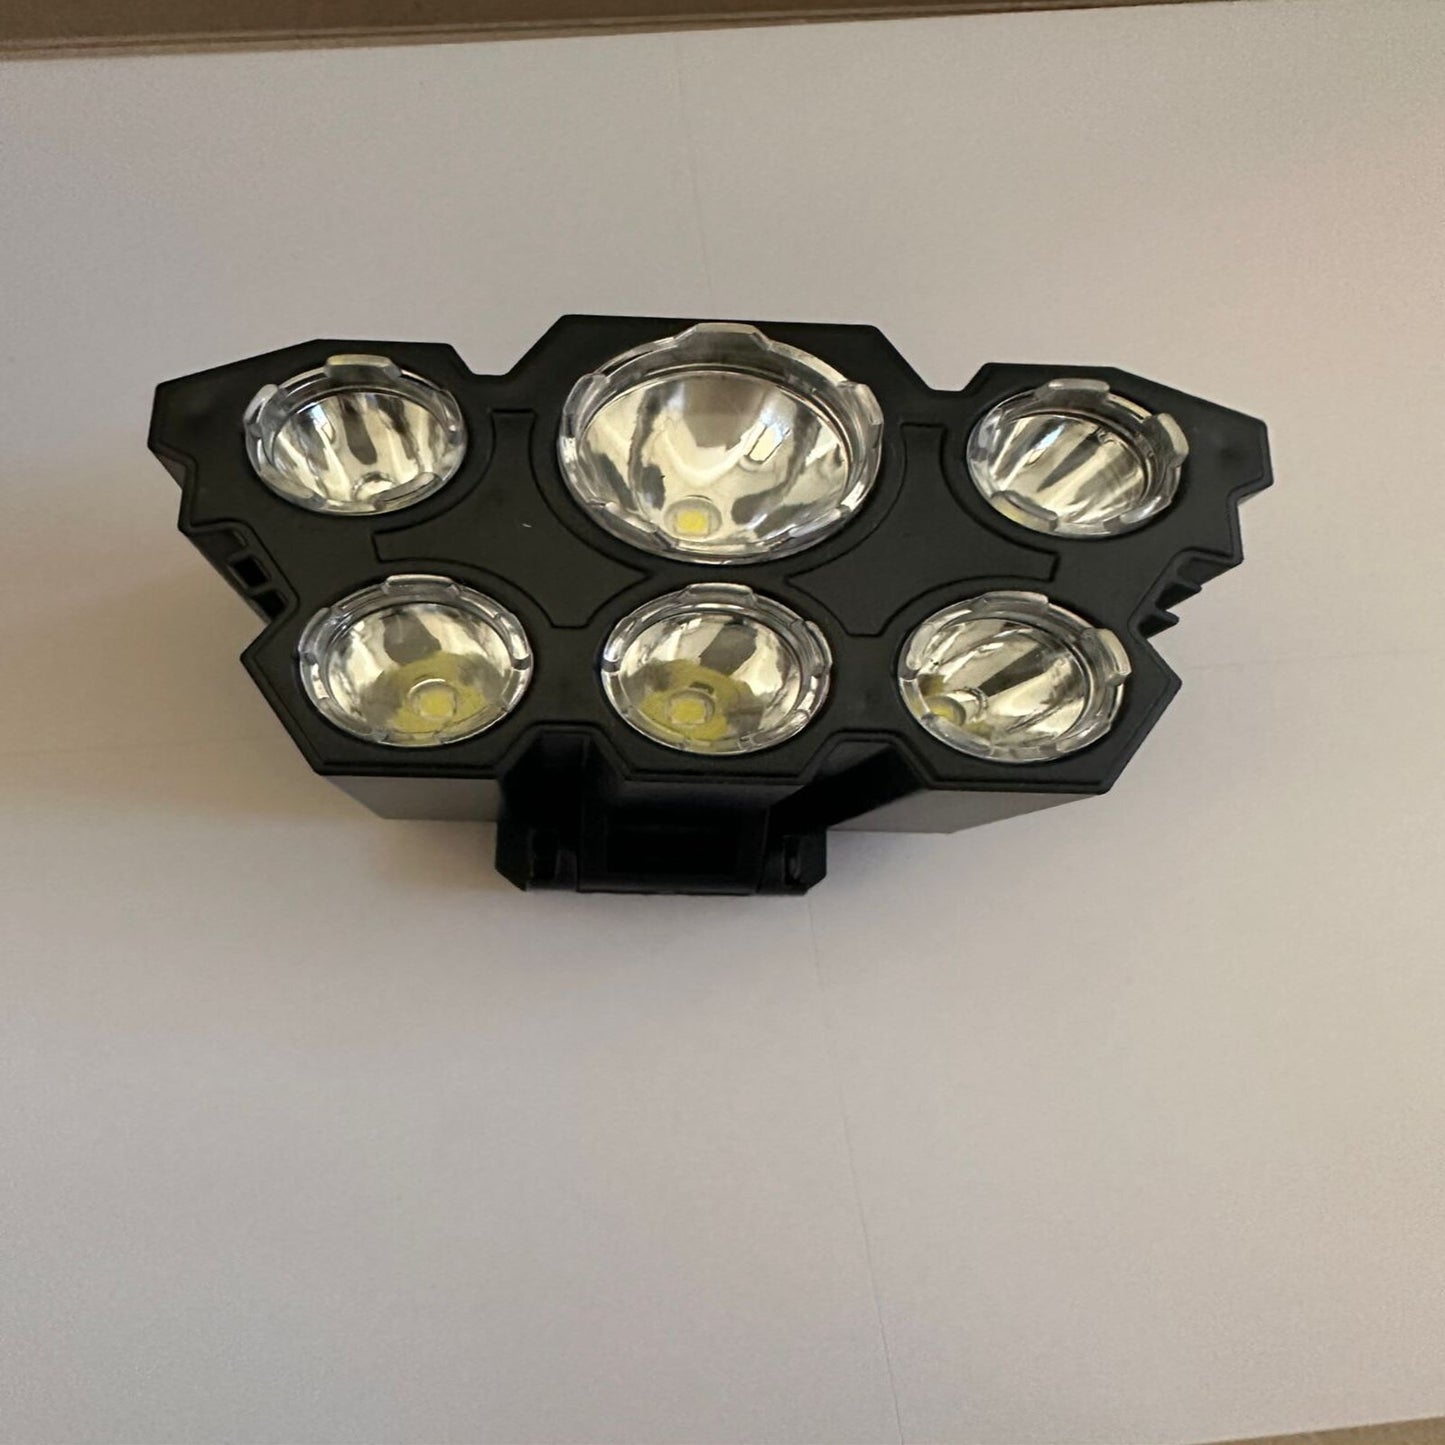 NAGLAVNA LAMPA SA USB PUNJAČOM SA 6 JAKIH LEDICA